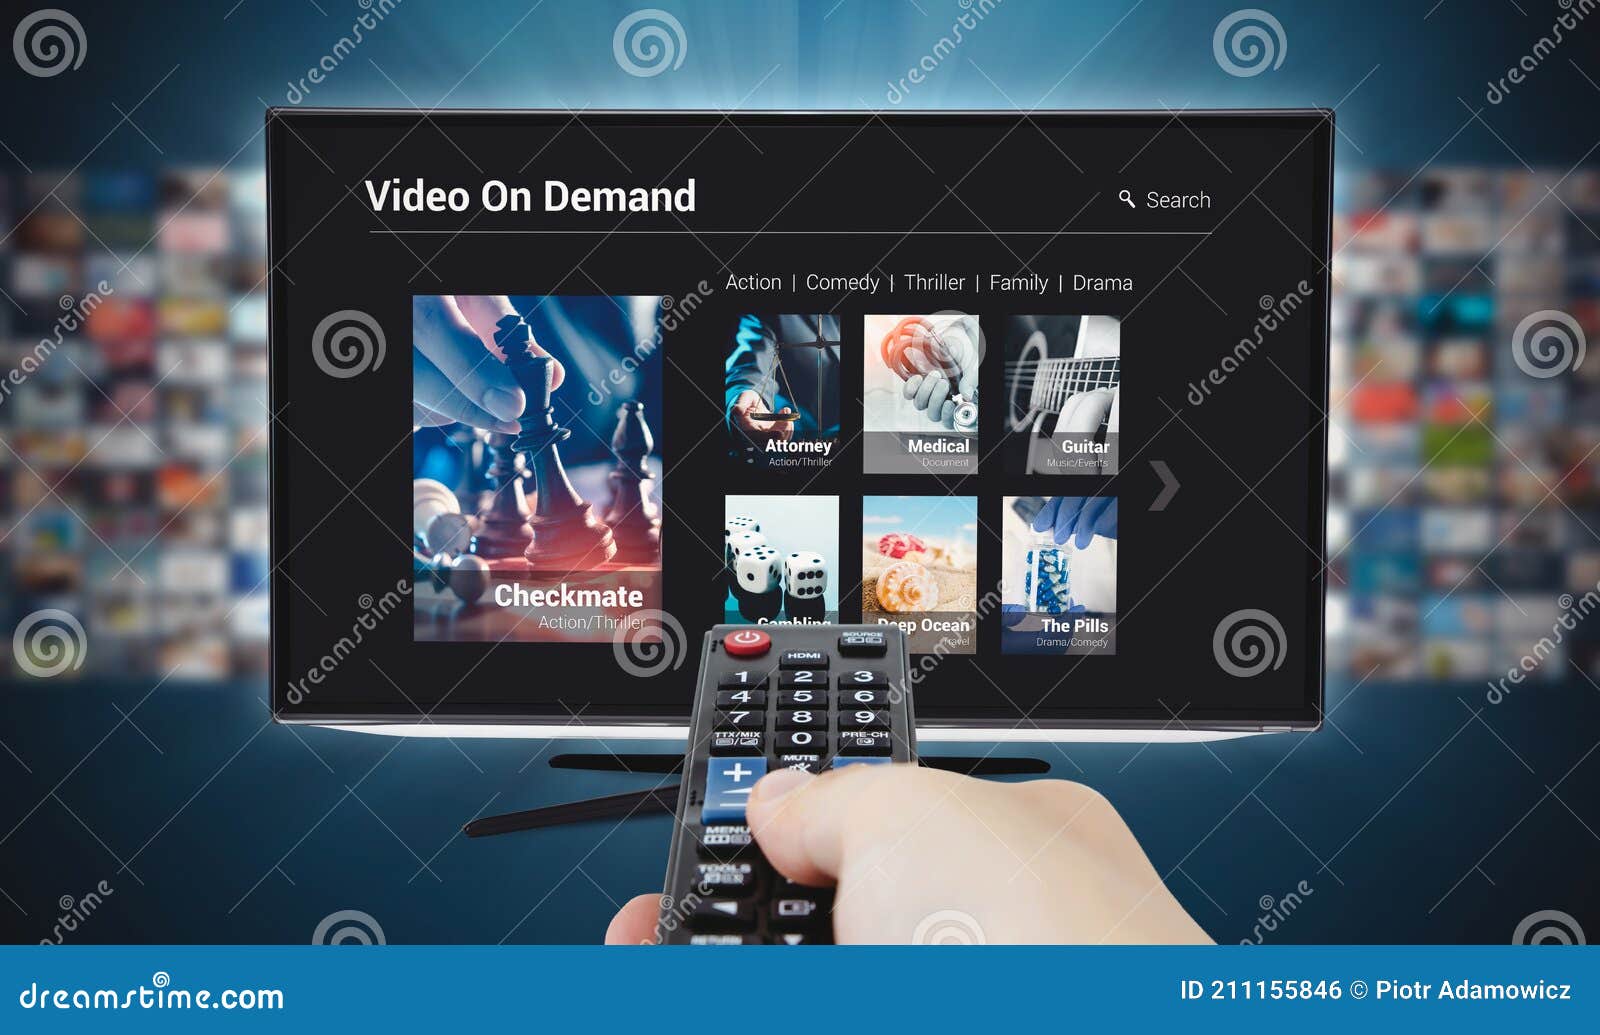 VOD - Video on Demand Service